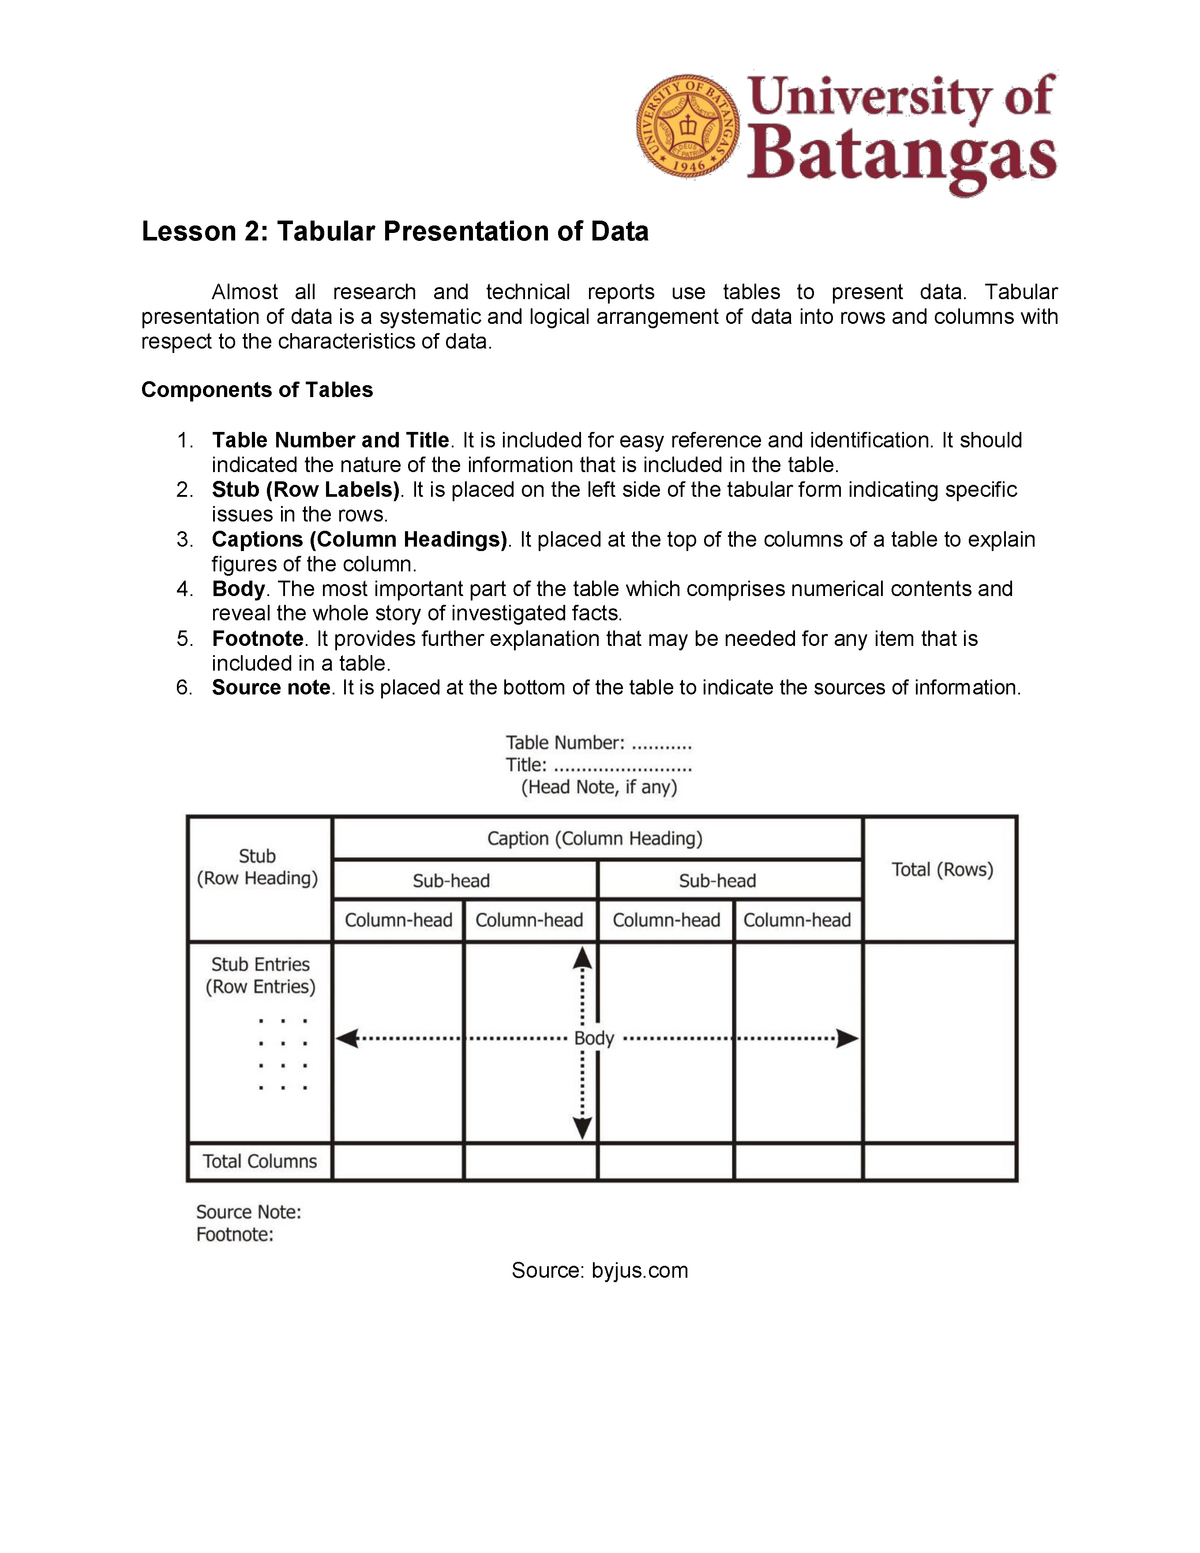 summary and presentation of data in tabular form